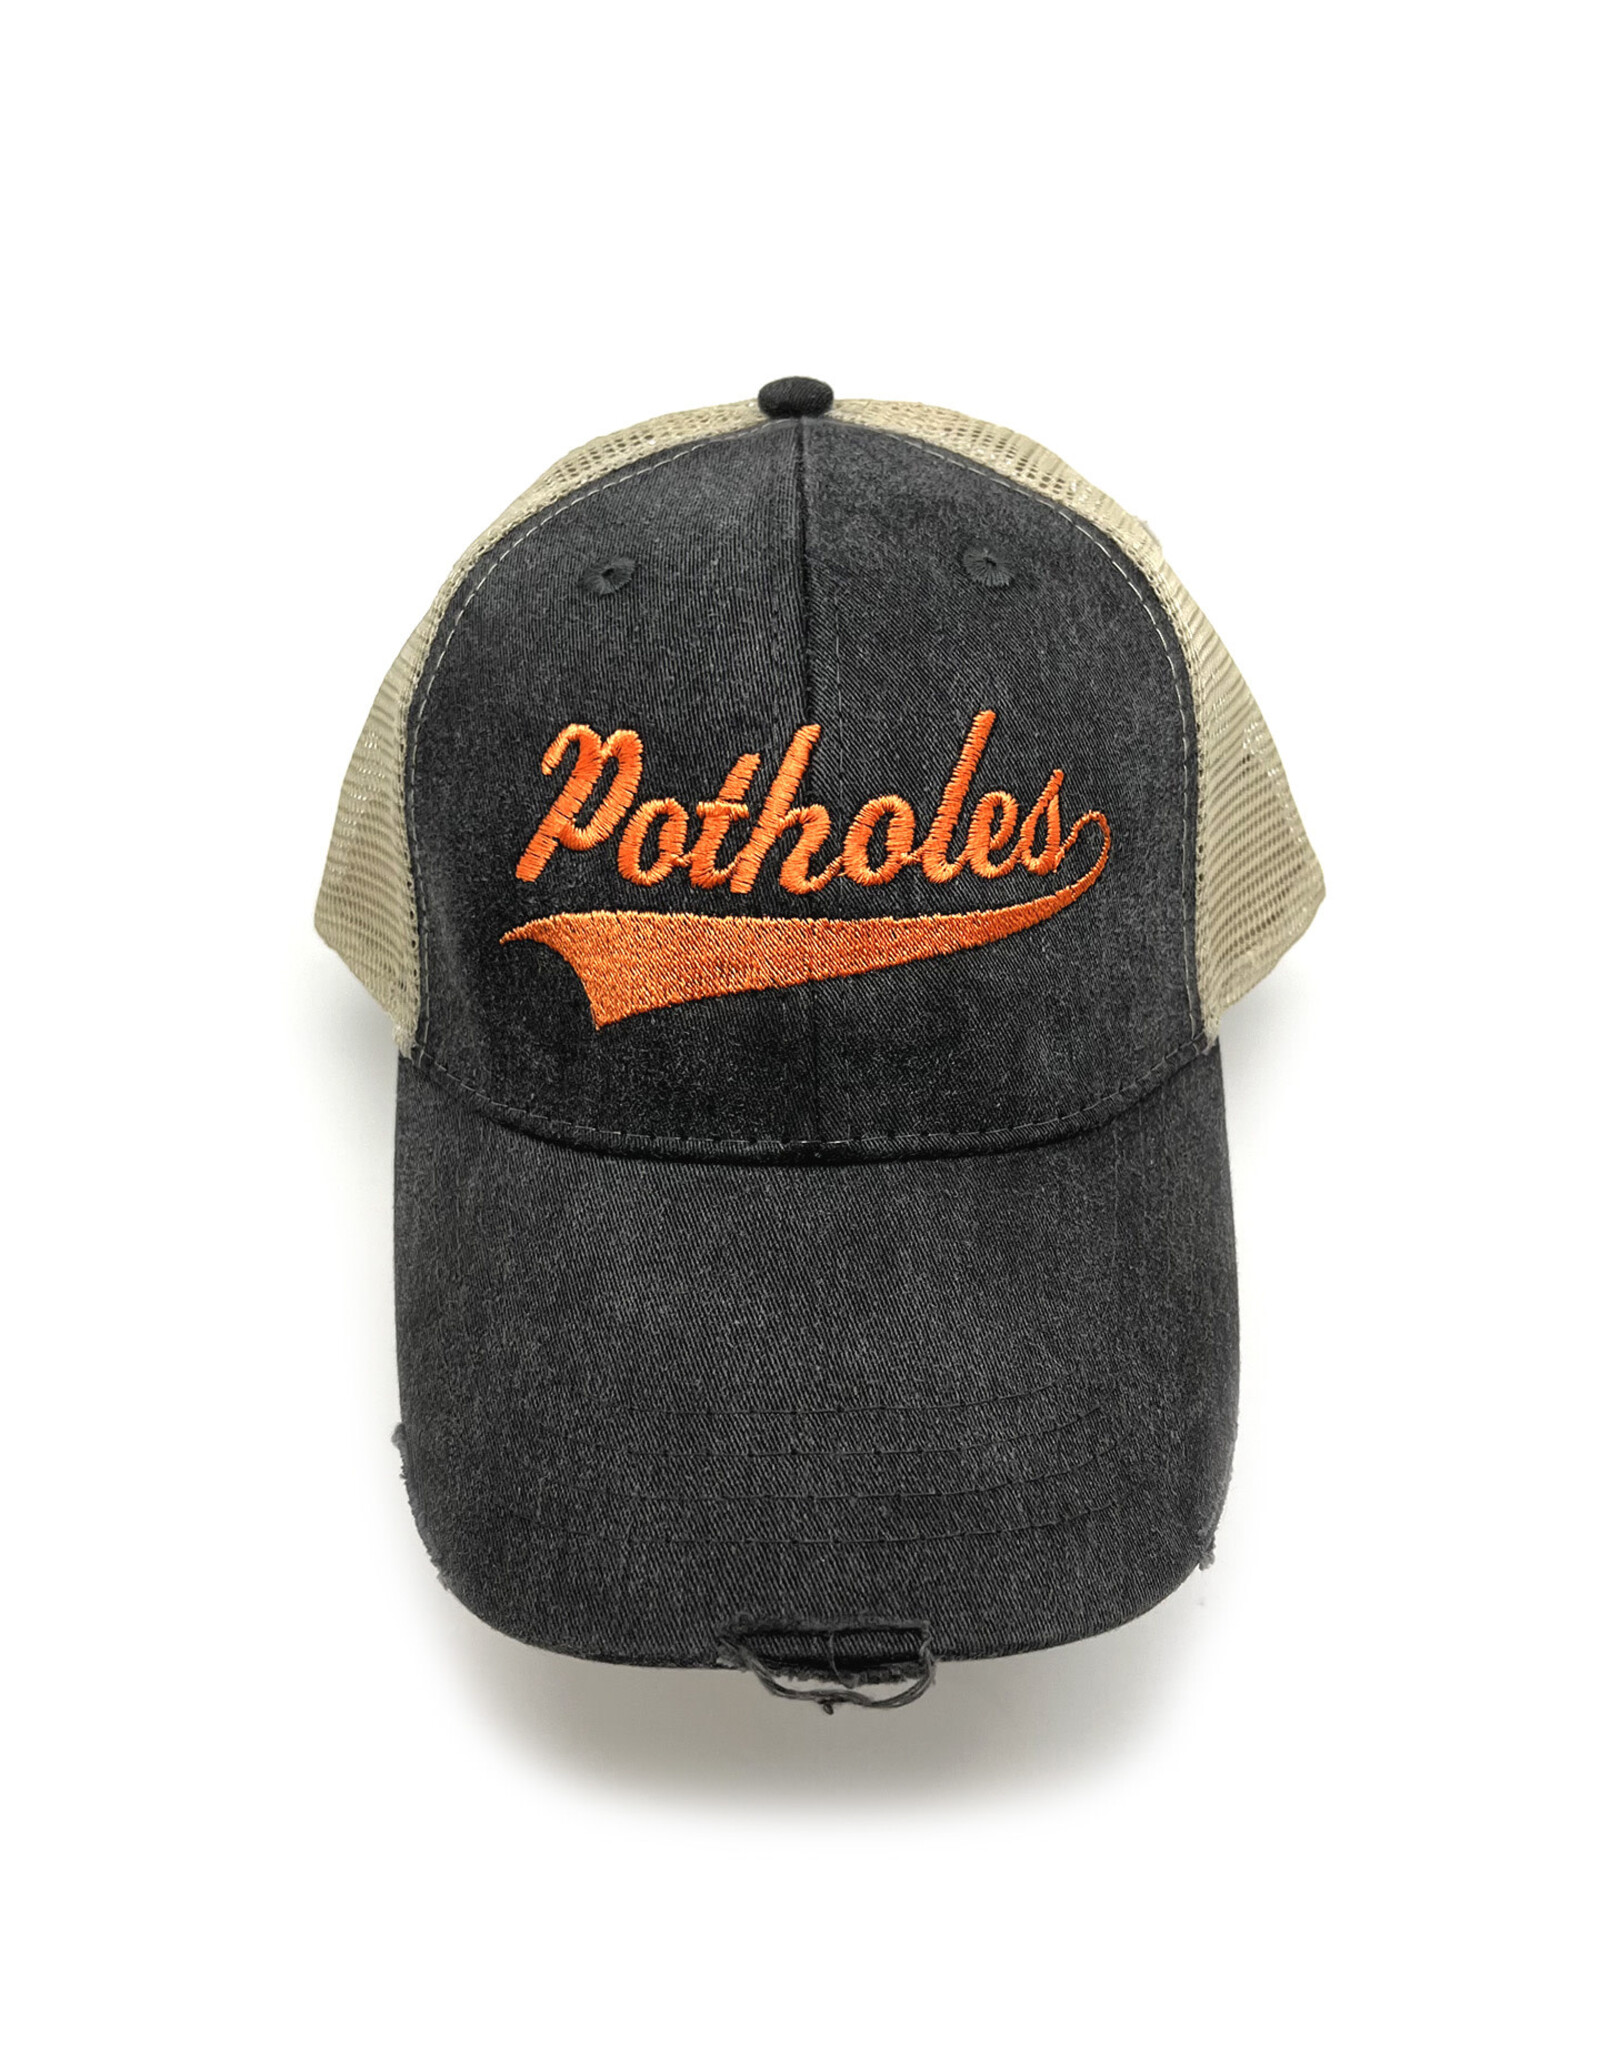 Potholes Distressed Trucker Hat